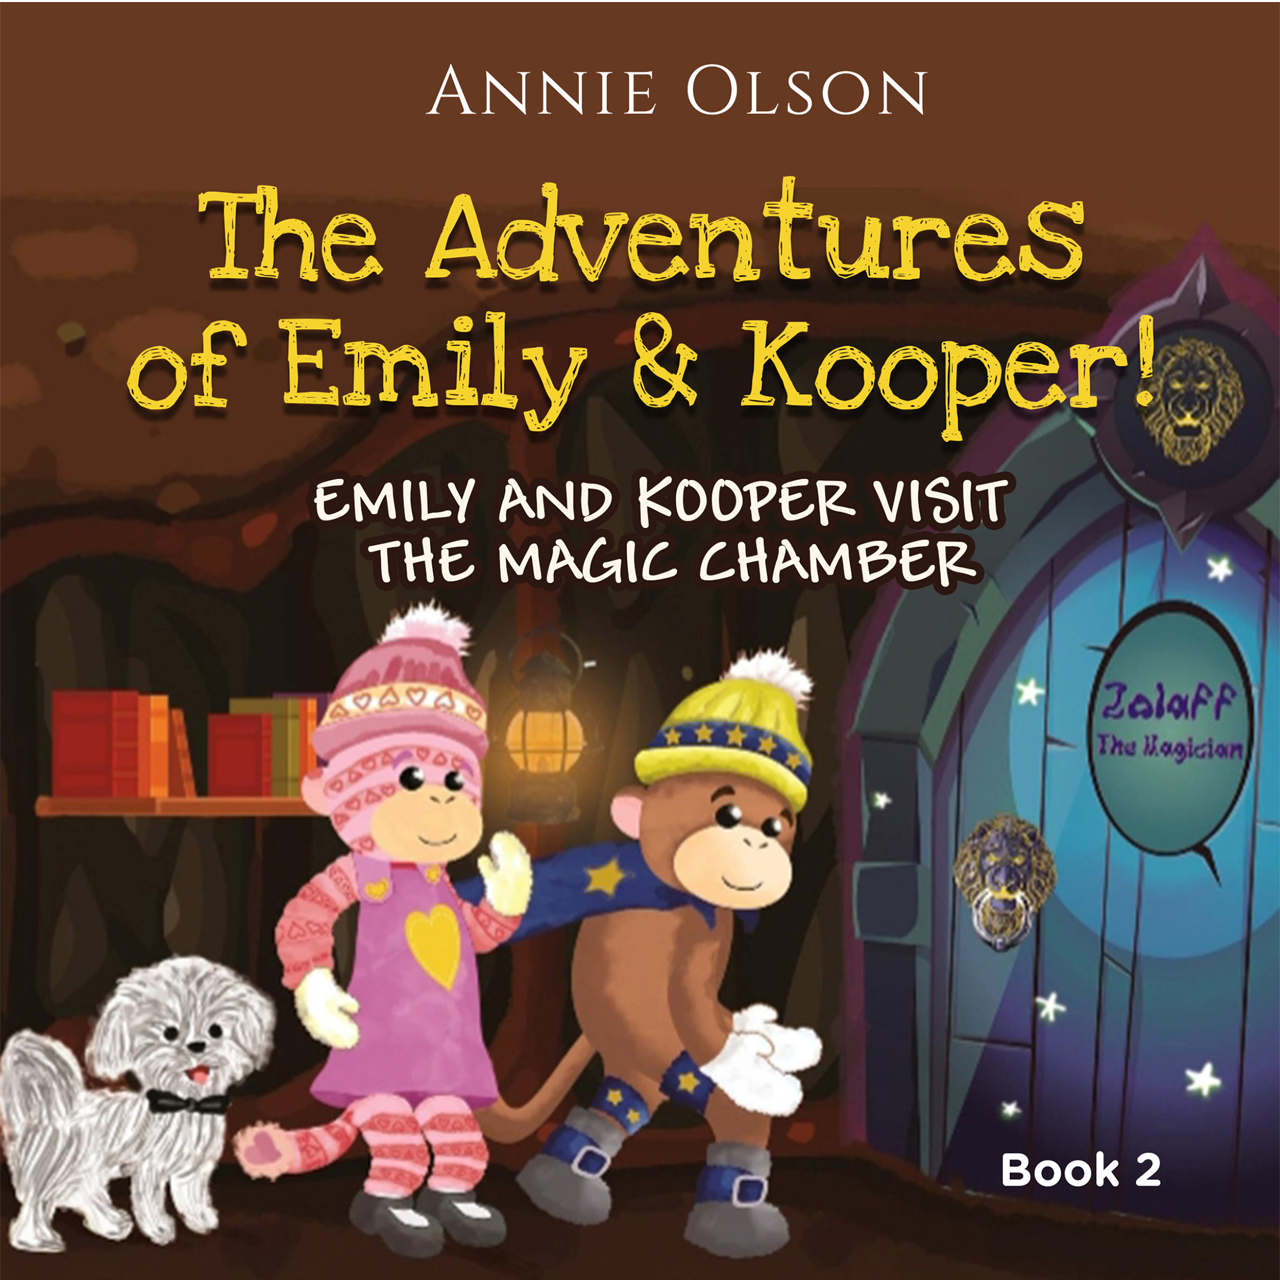 Emily and Kooper visit the Magic Chamber